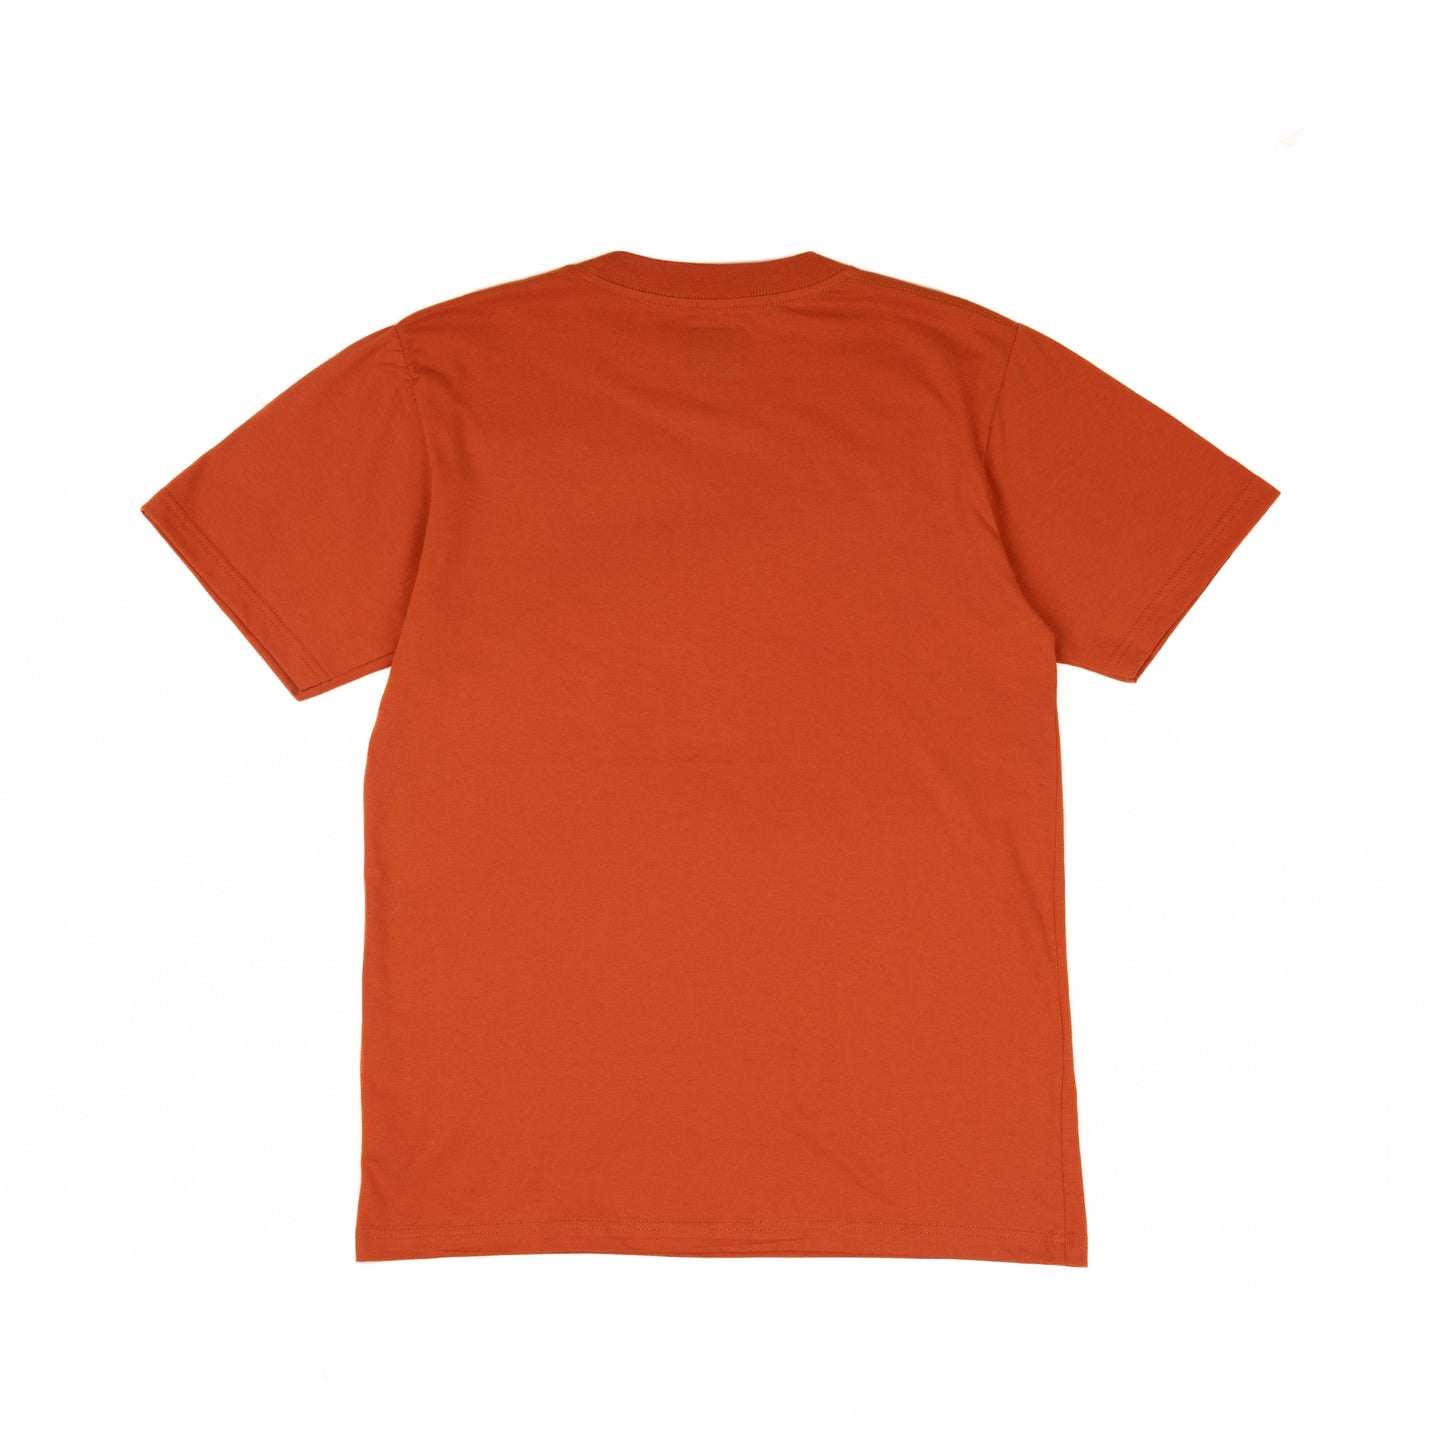 AZA T-Shirt Pro Basic Edition (Vol.2) - Orange / Green